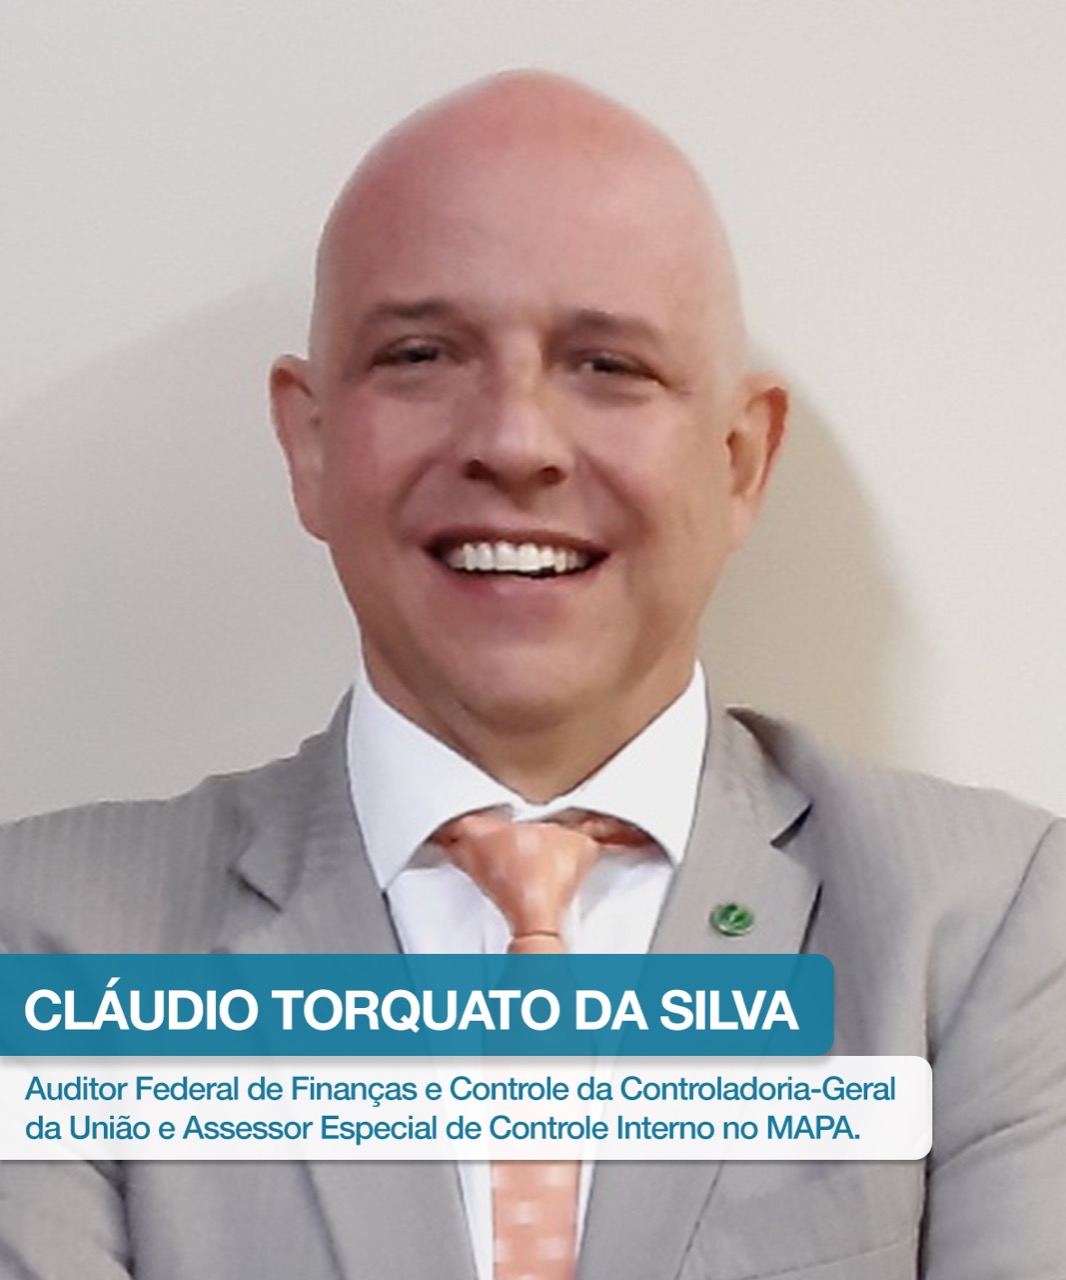 Claudio Torquato da Silva